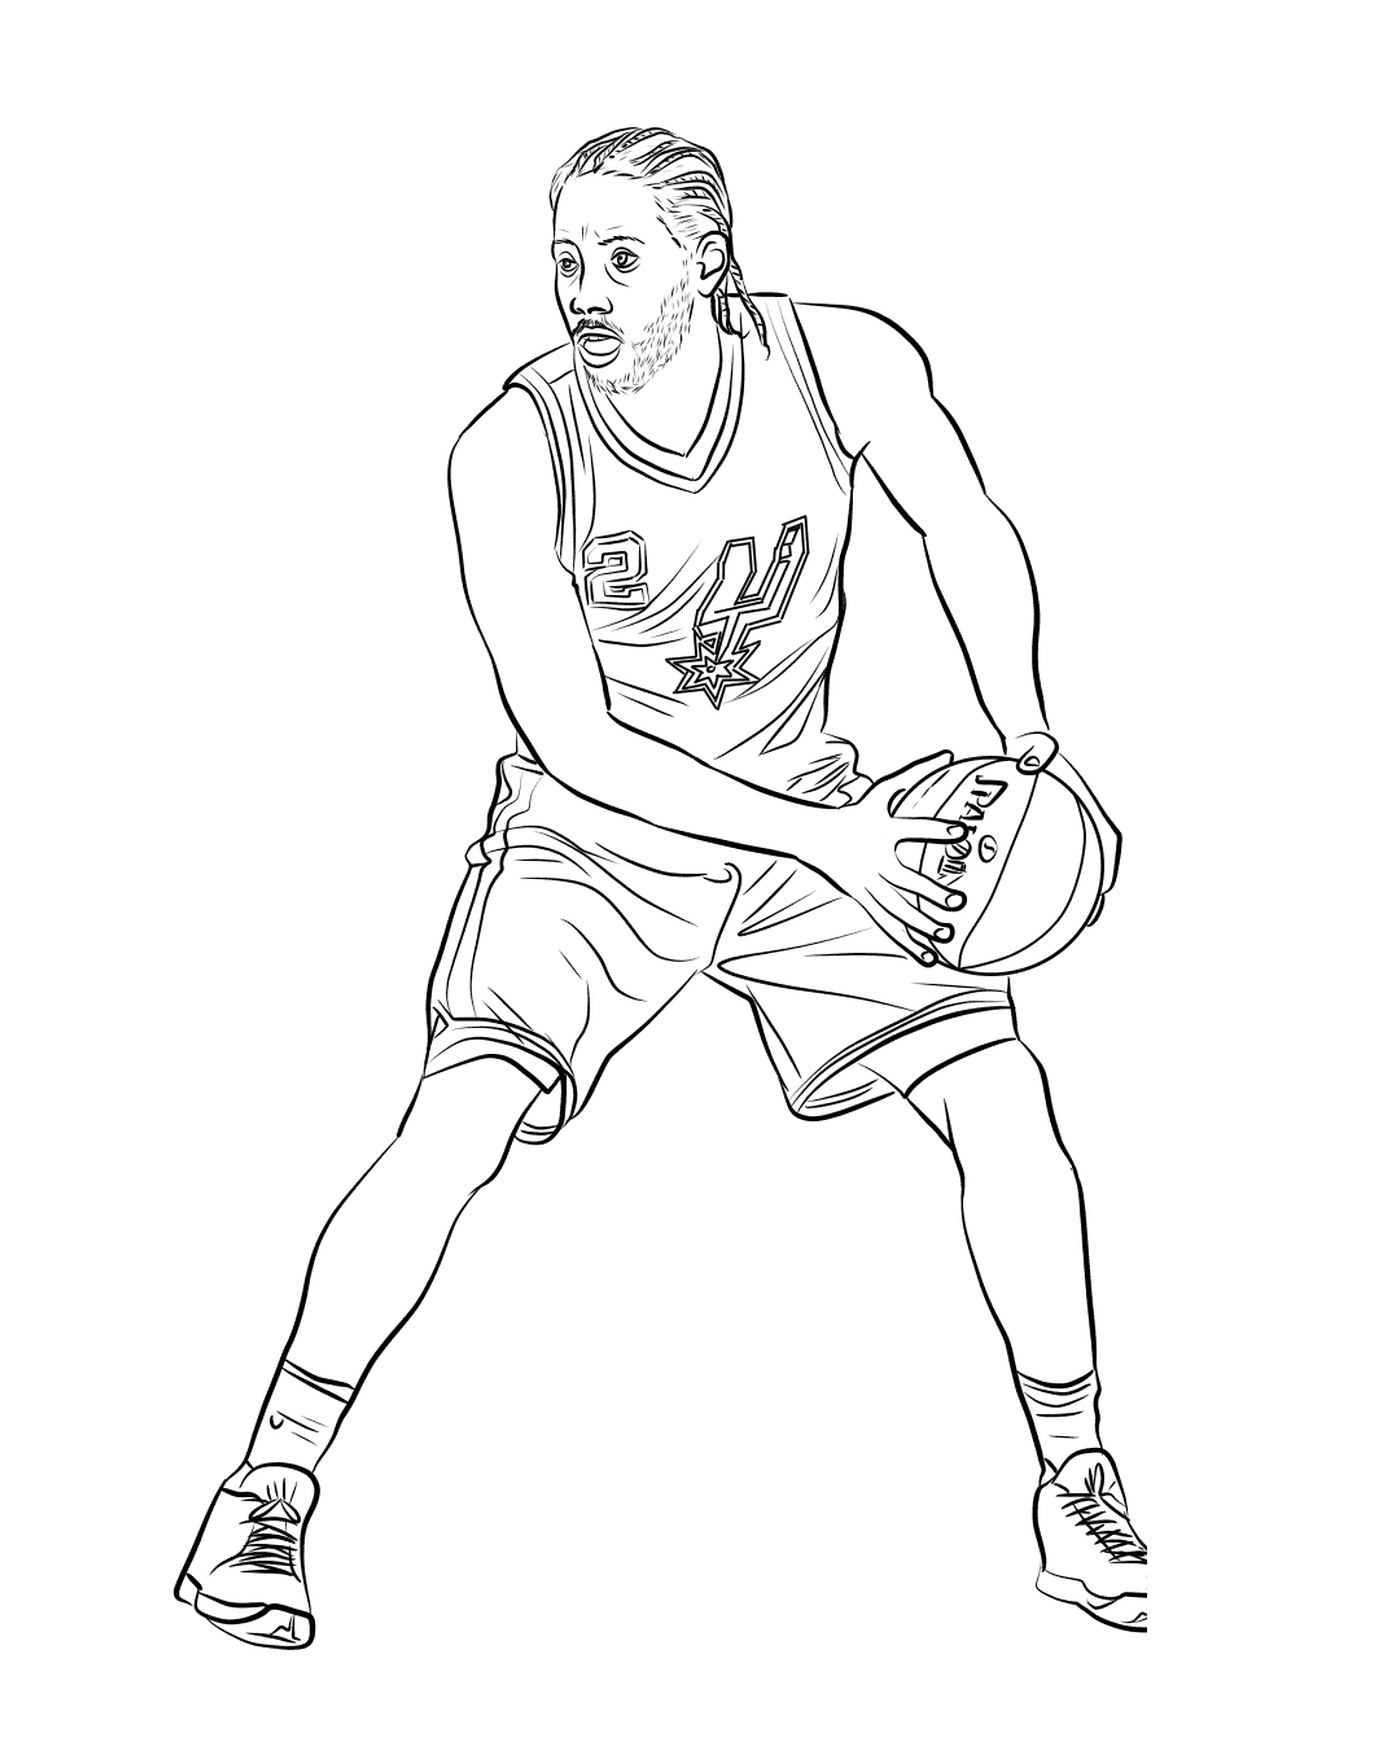  Kawhi ليونارد، لاعب كرة سلة 